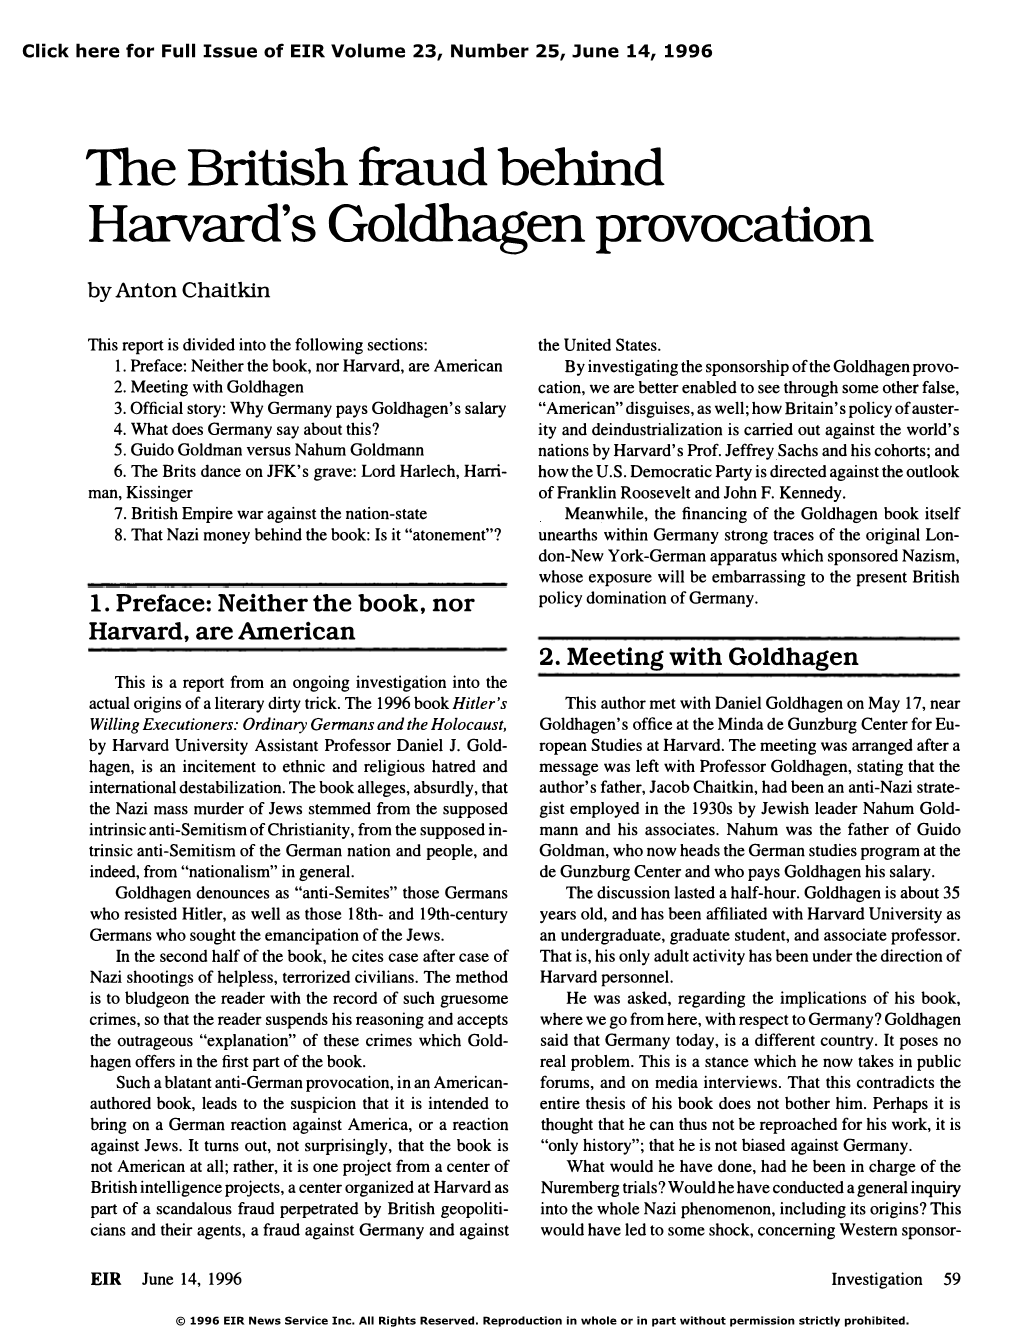 The British Fraud Behind Harvard's Goldhagen Provocation